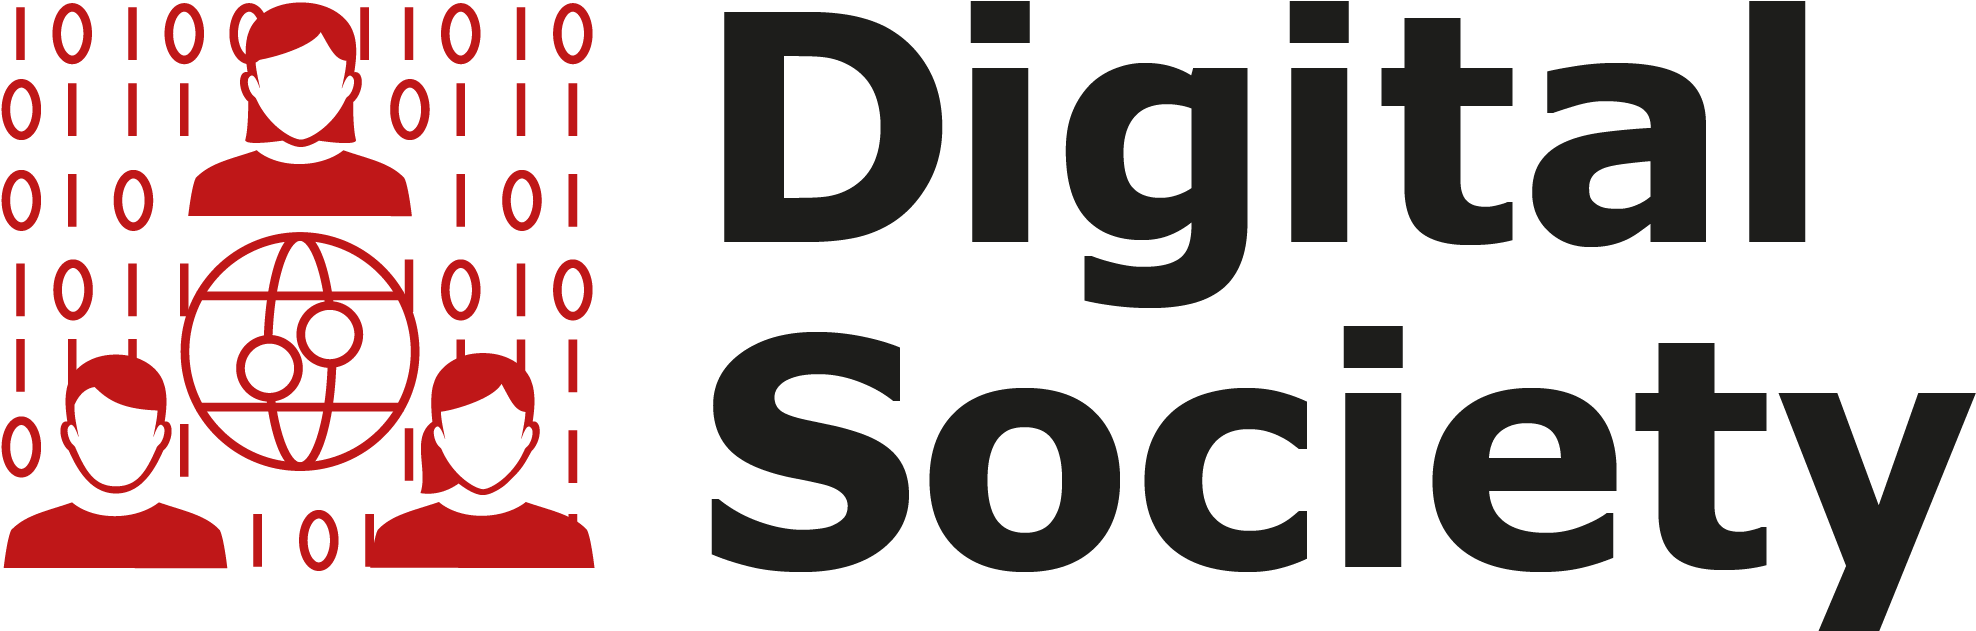 Digital Society - Digital Society Vsnu (3079x747), Png Download